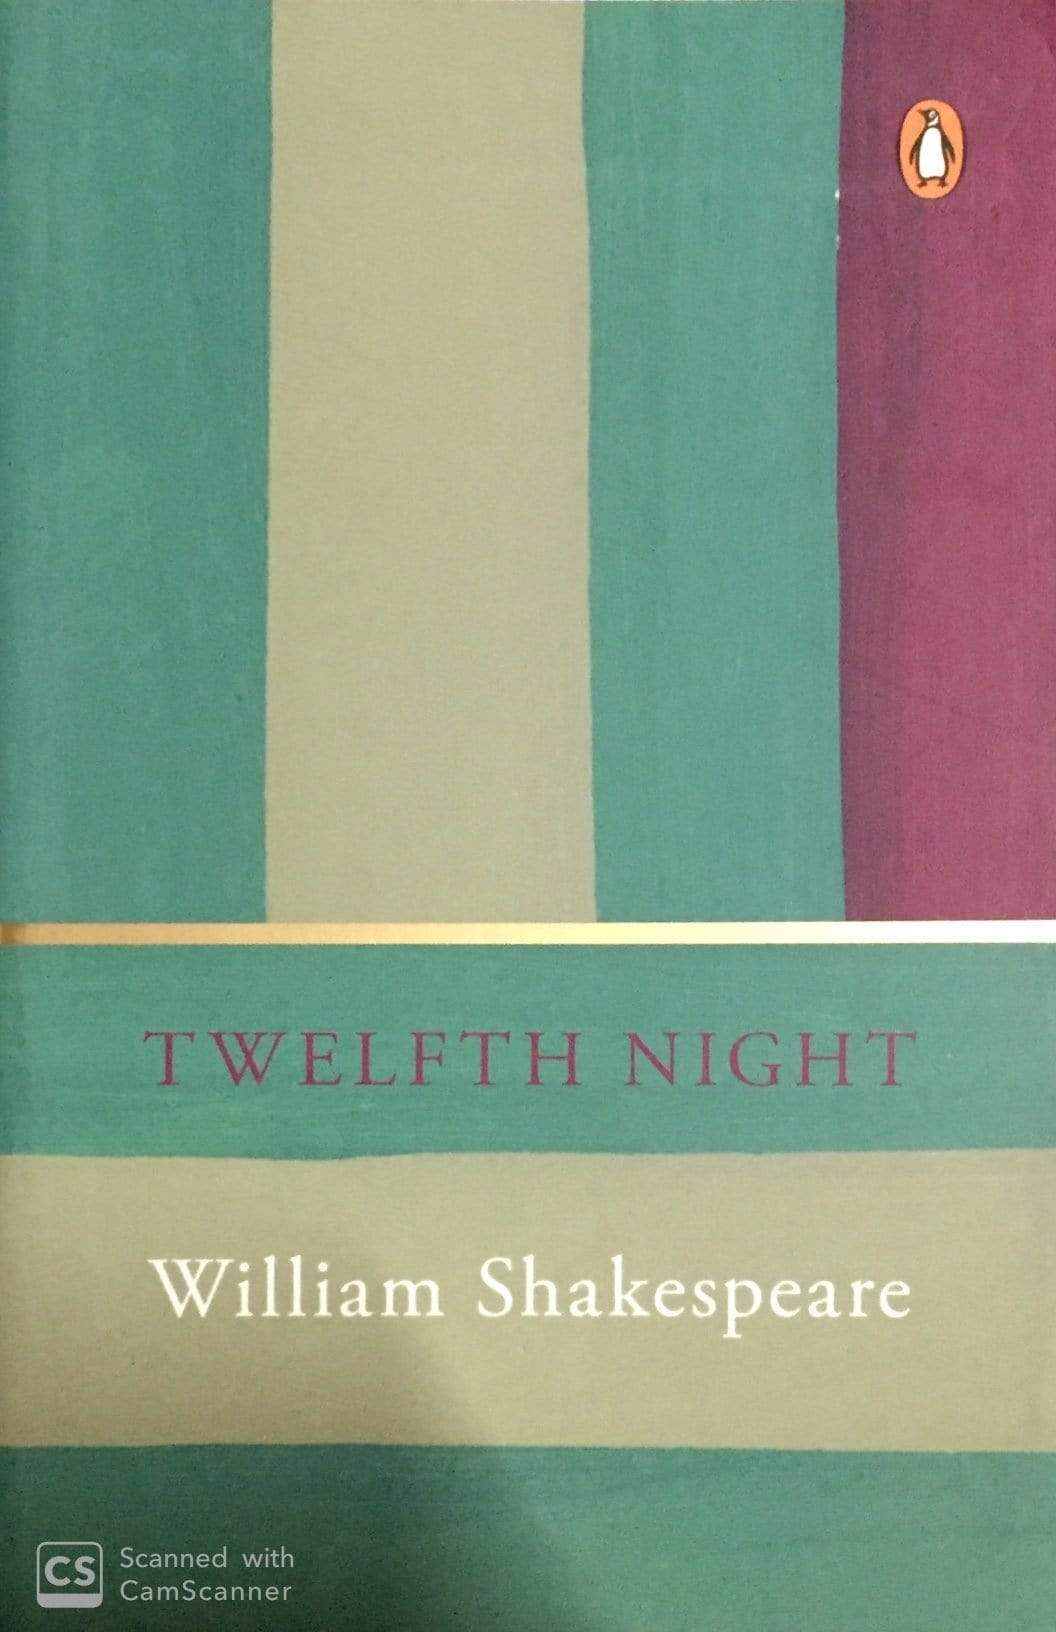 Twelfth Night (ppc)